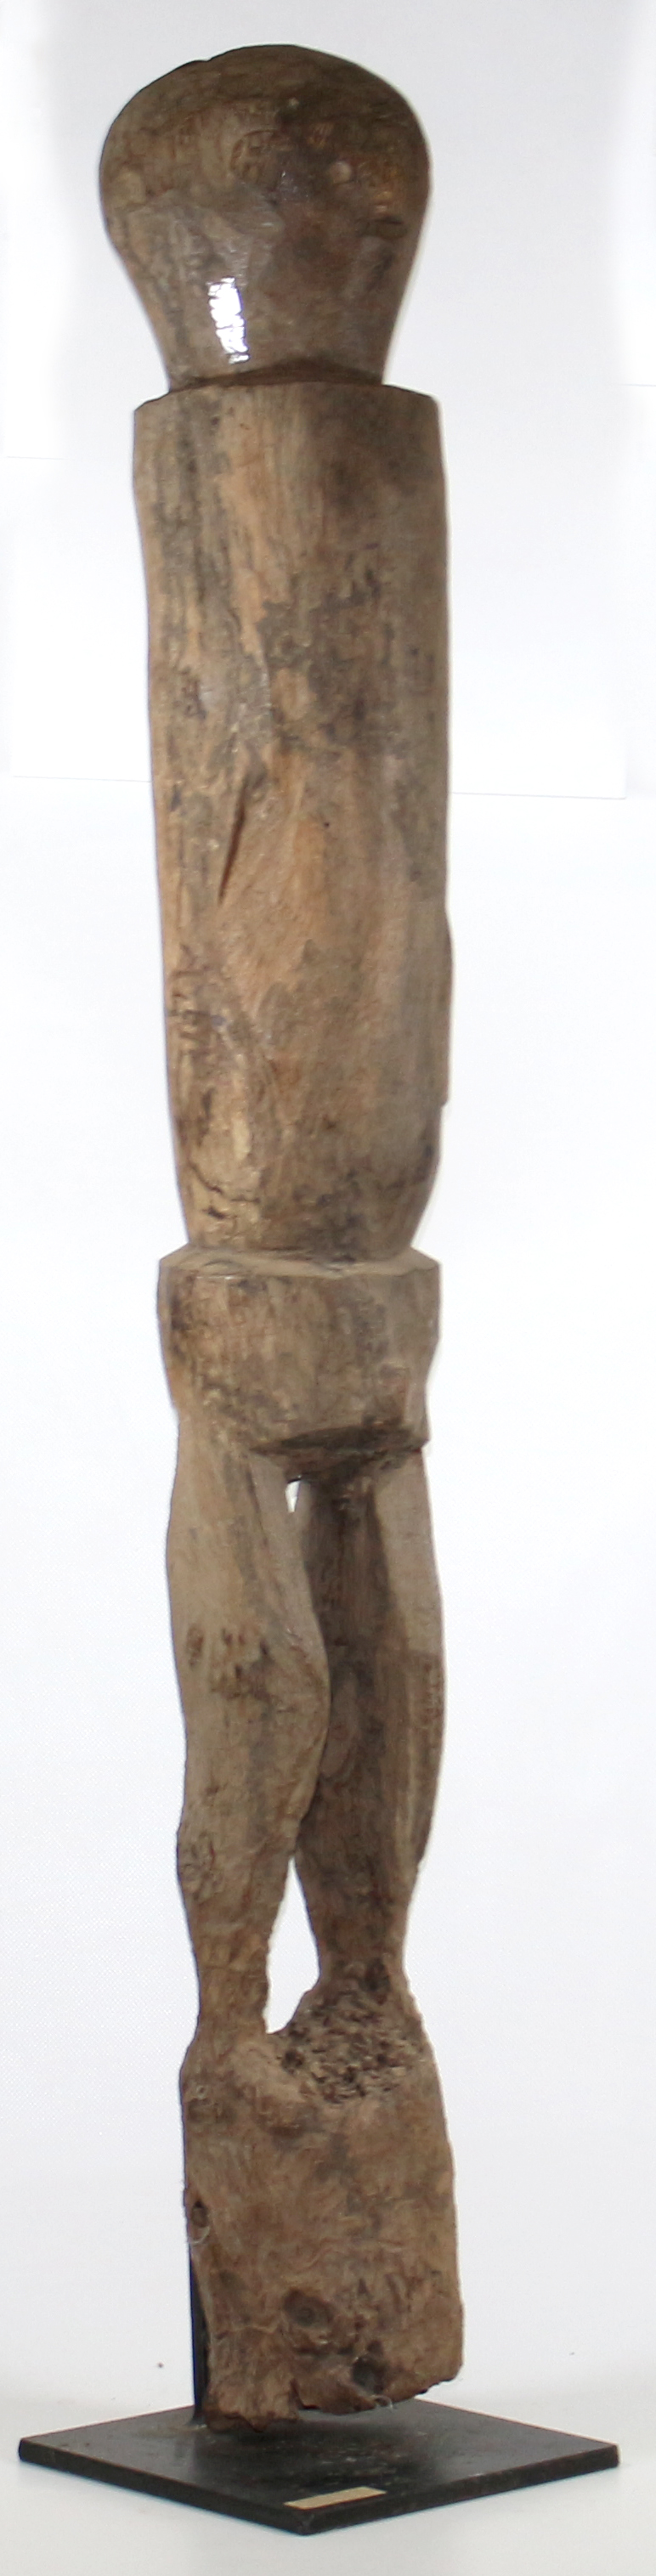 Lamba Togo Pfostenfigur | Bild Nr.2